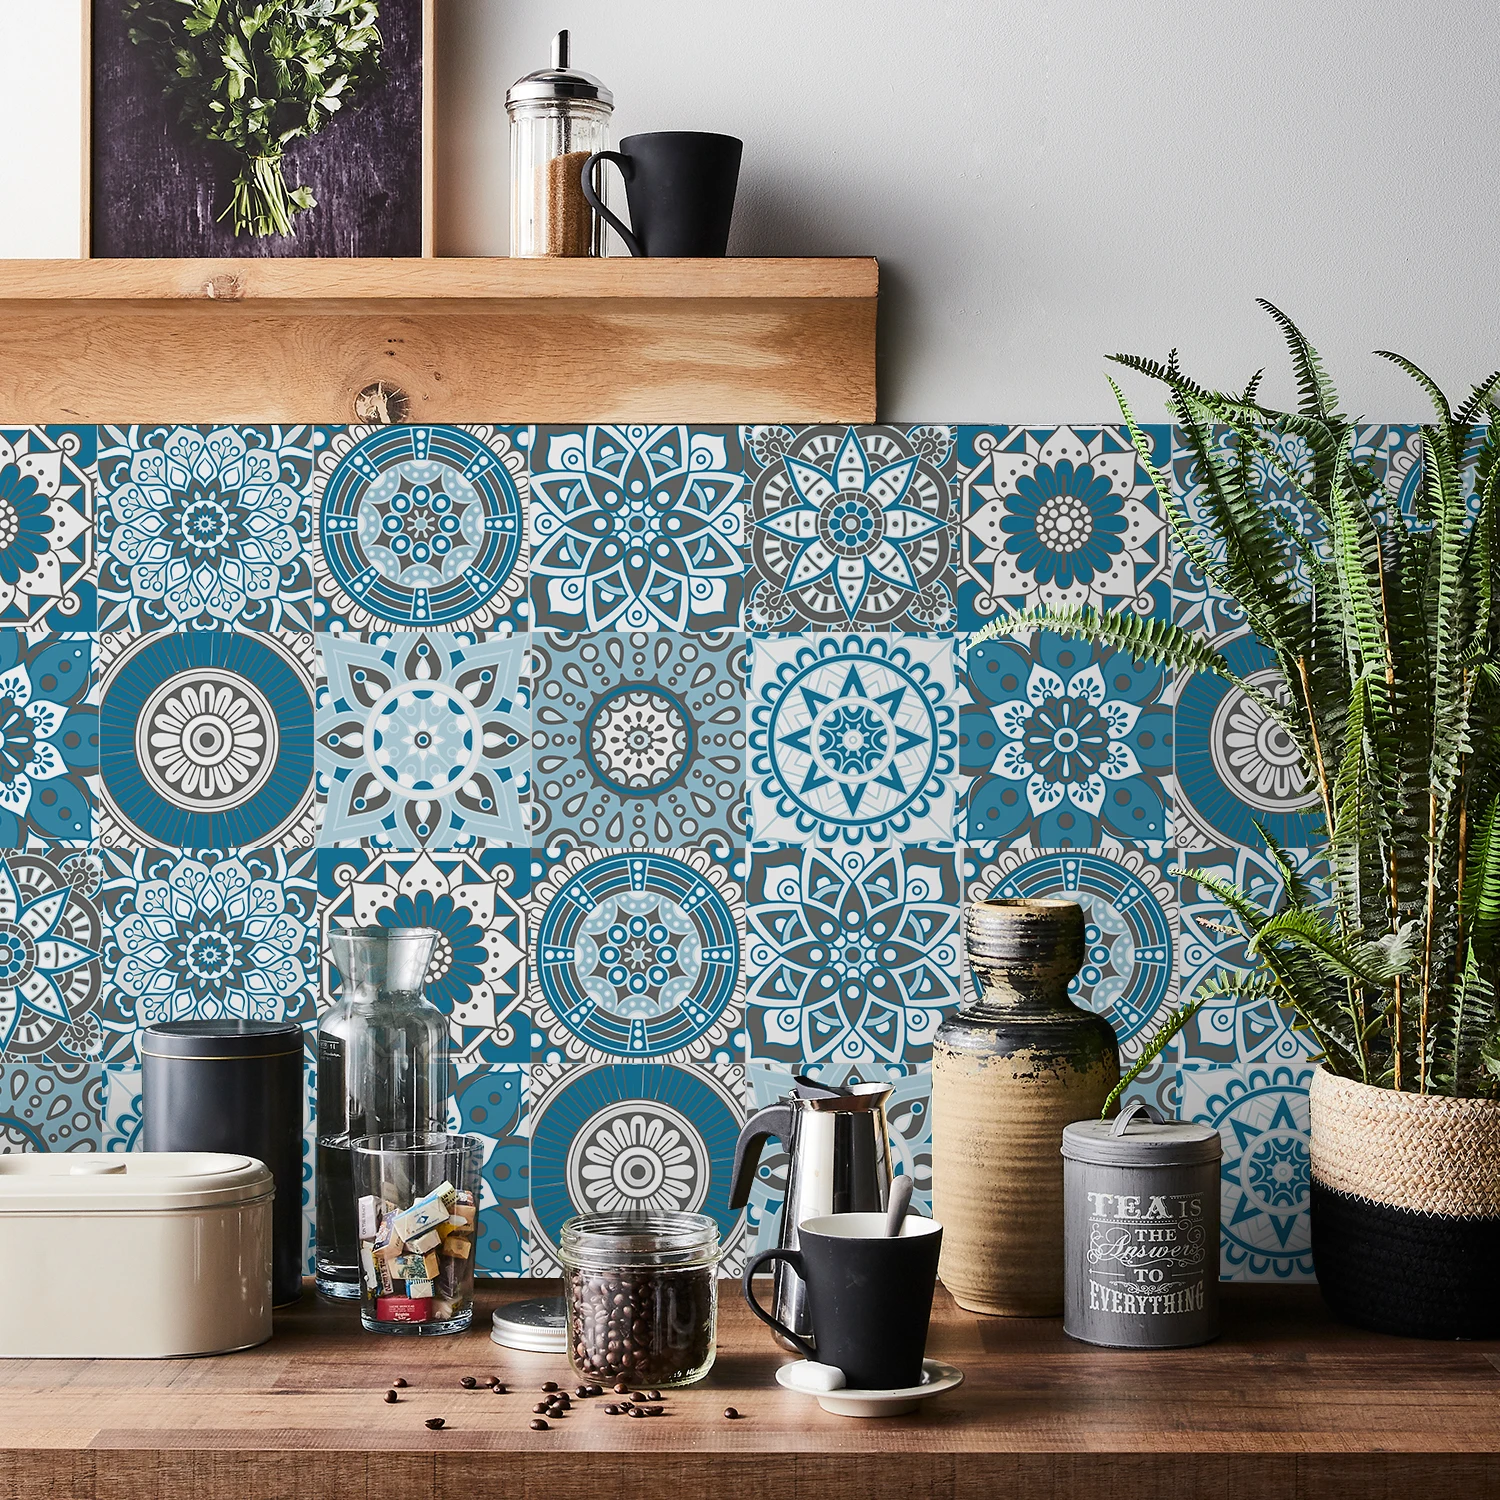 24 Pieces Wall Tile Sticker Bathroom Self Adhesive Mandala Mural Waterproof PVC Kitchen Cabinet Surface Refurbishment Wall Decal